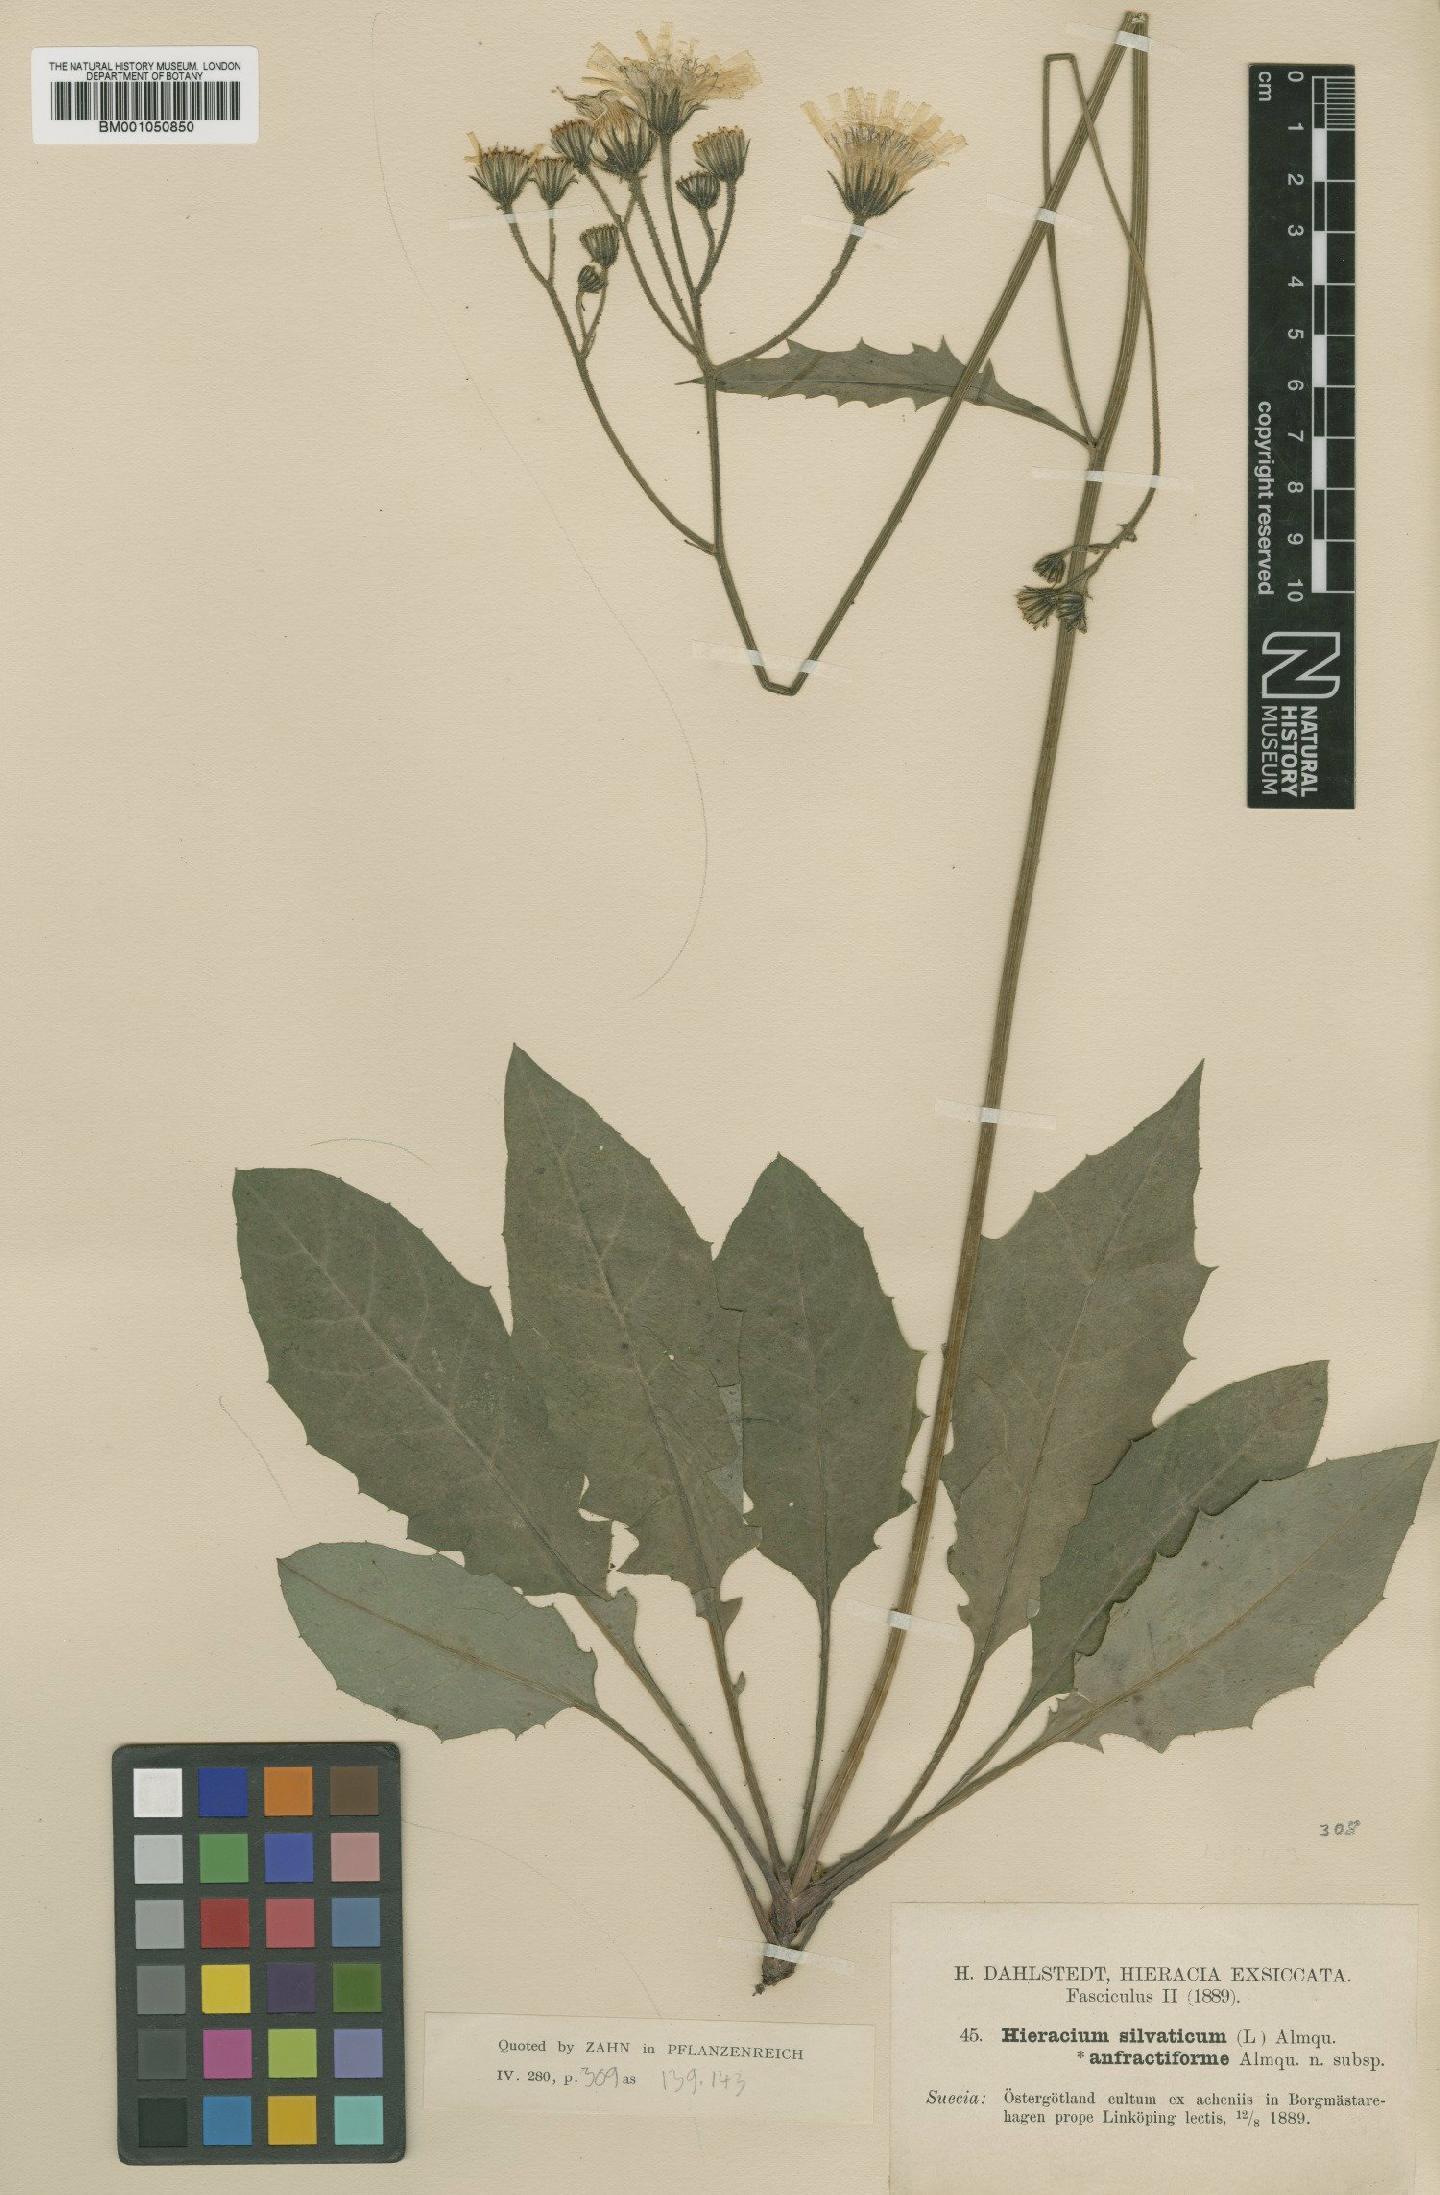 To NHMUK collection (Hieracium murorum subsp. anfractiforme (Almq.) Zahn; TYPE; NHMUK:ecatalogue:2399882)